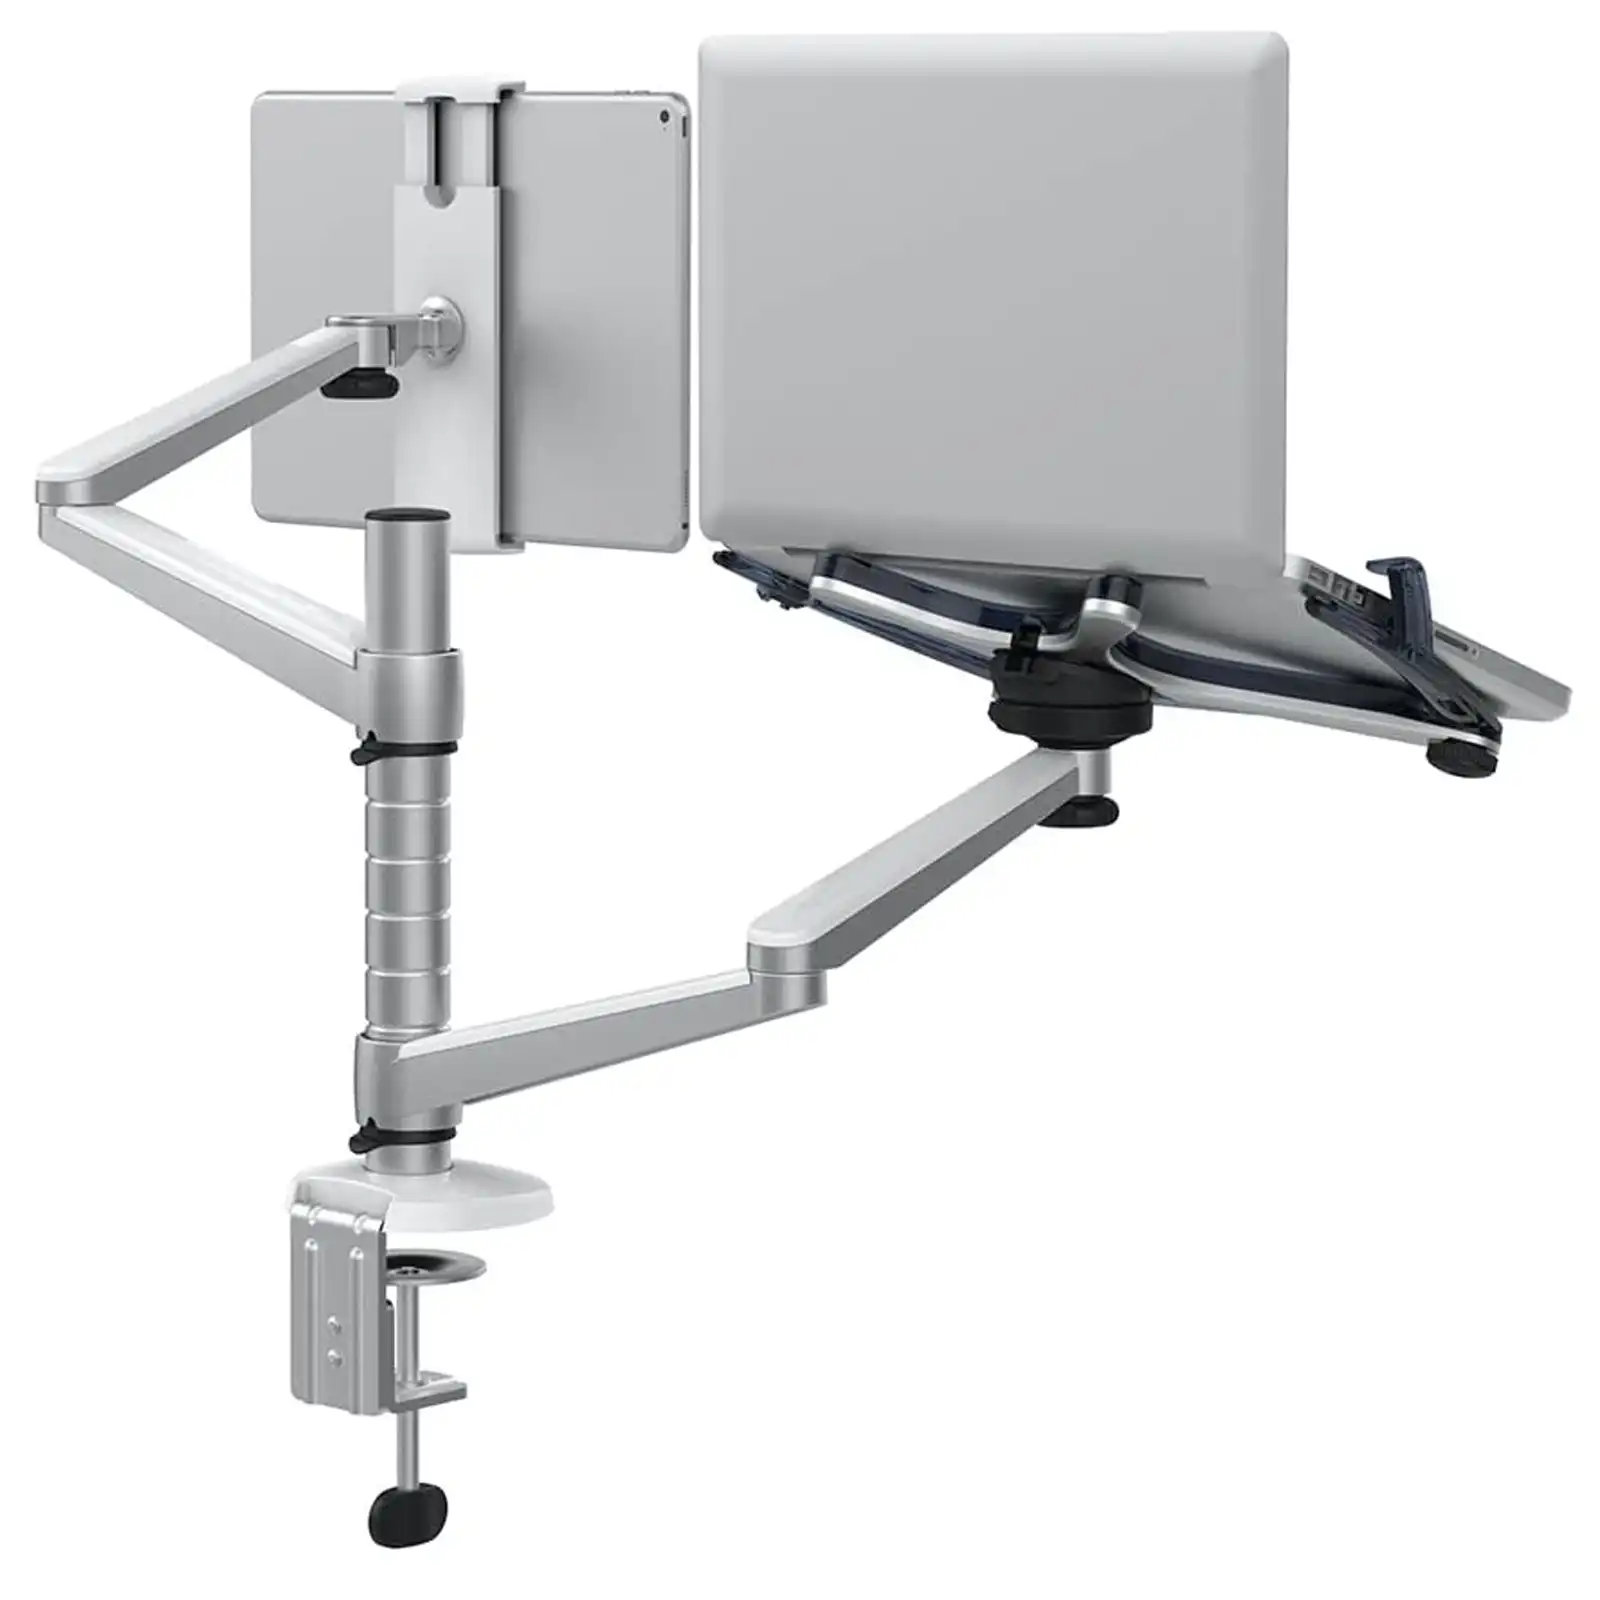 TODO Aluminium Dual Laptop + Tablet Stand Desk Clamp Mount Bracket 2 Arm